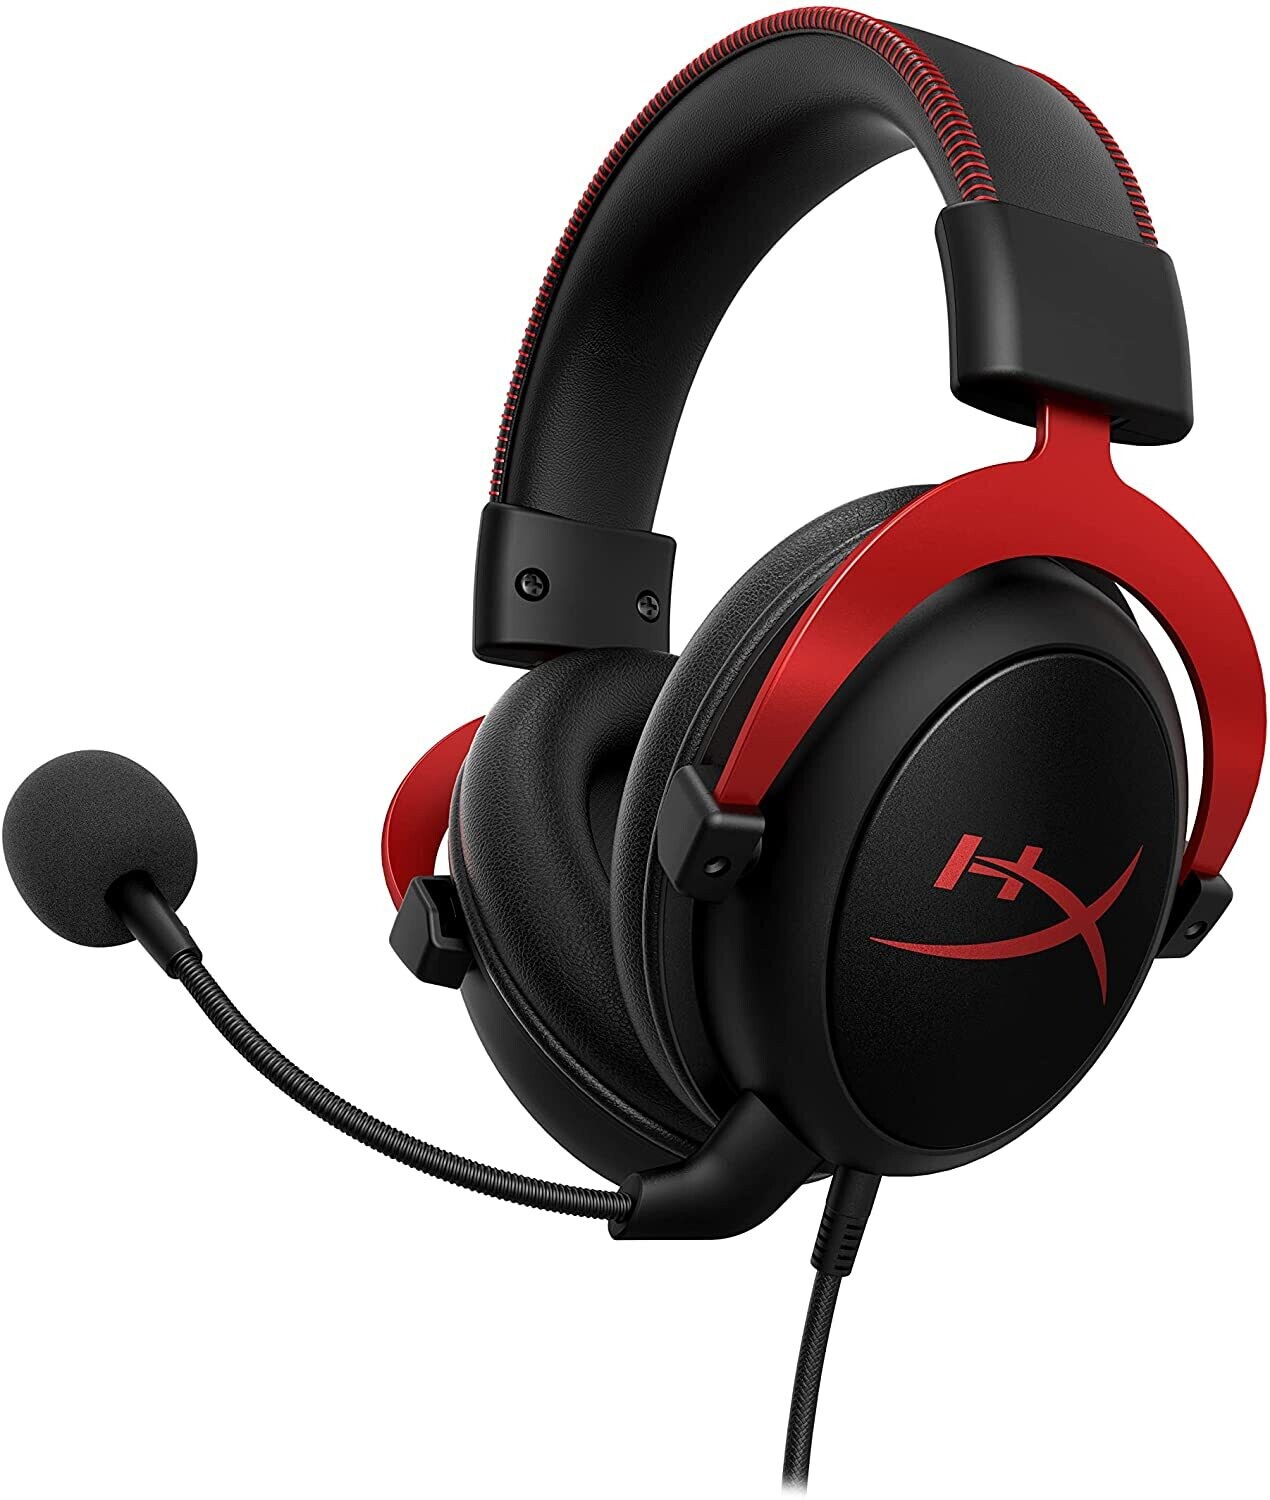 Cloud II - gaming headphones (for PC / PS4 / Mac) red